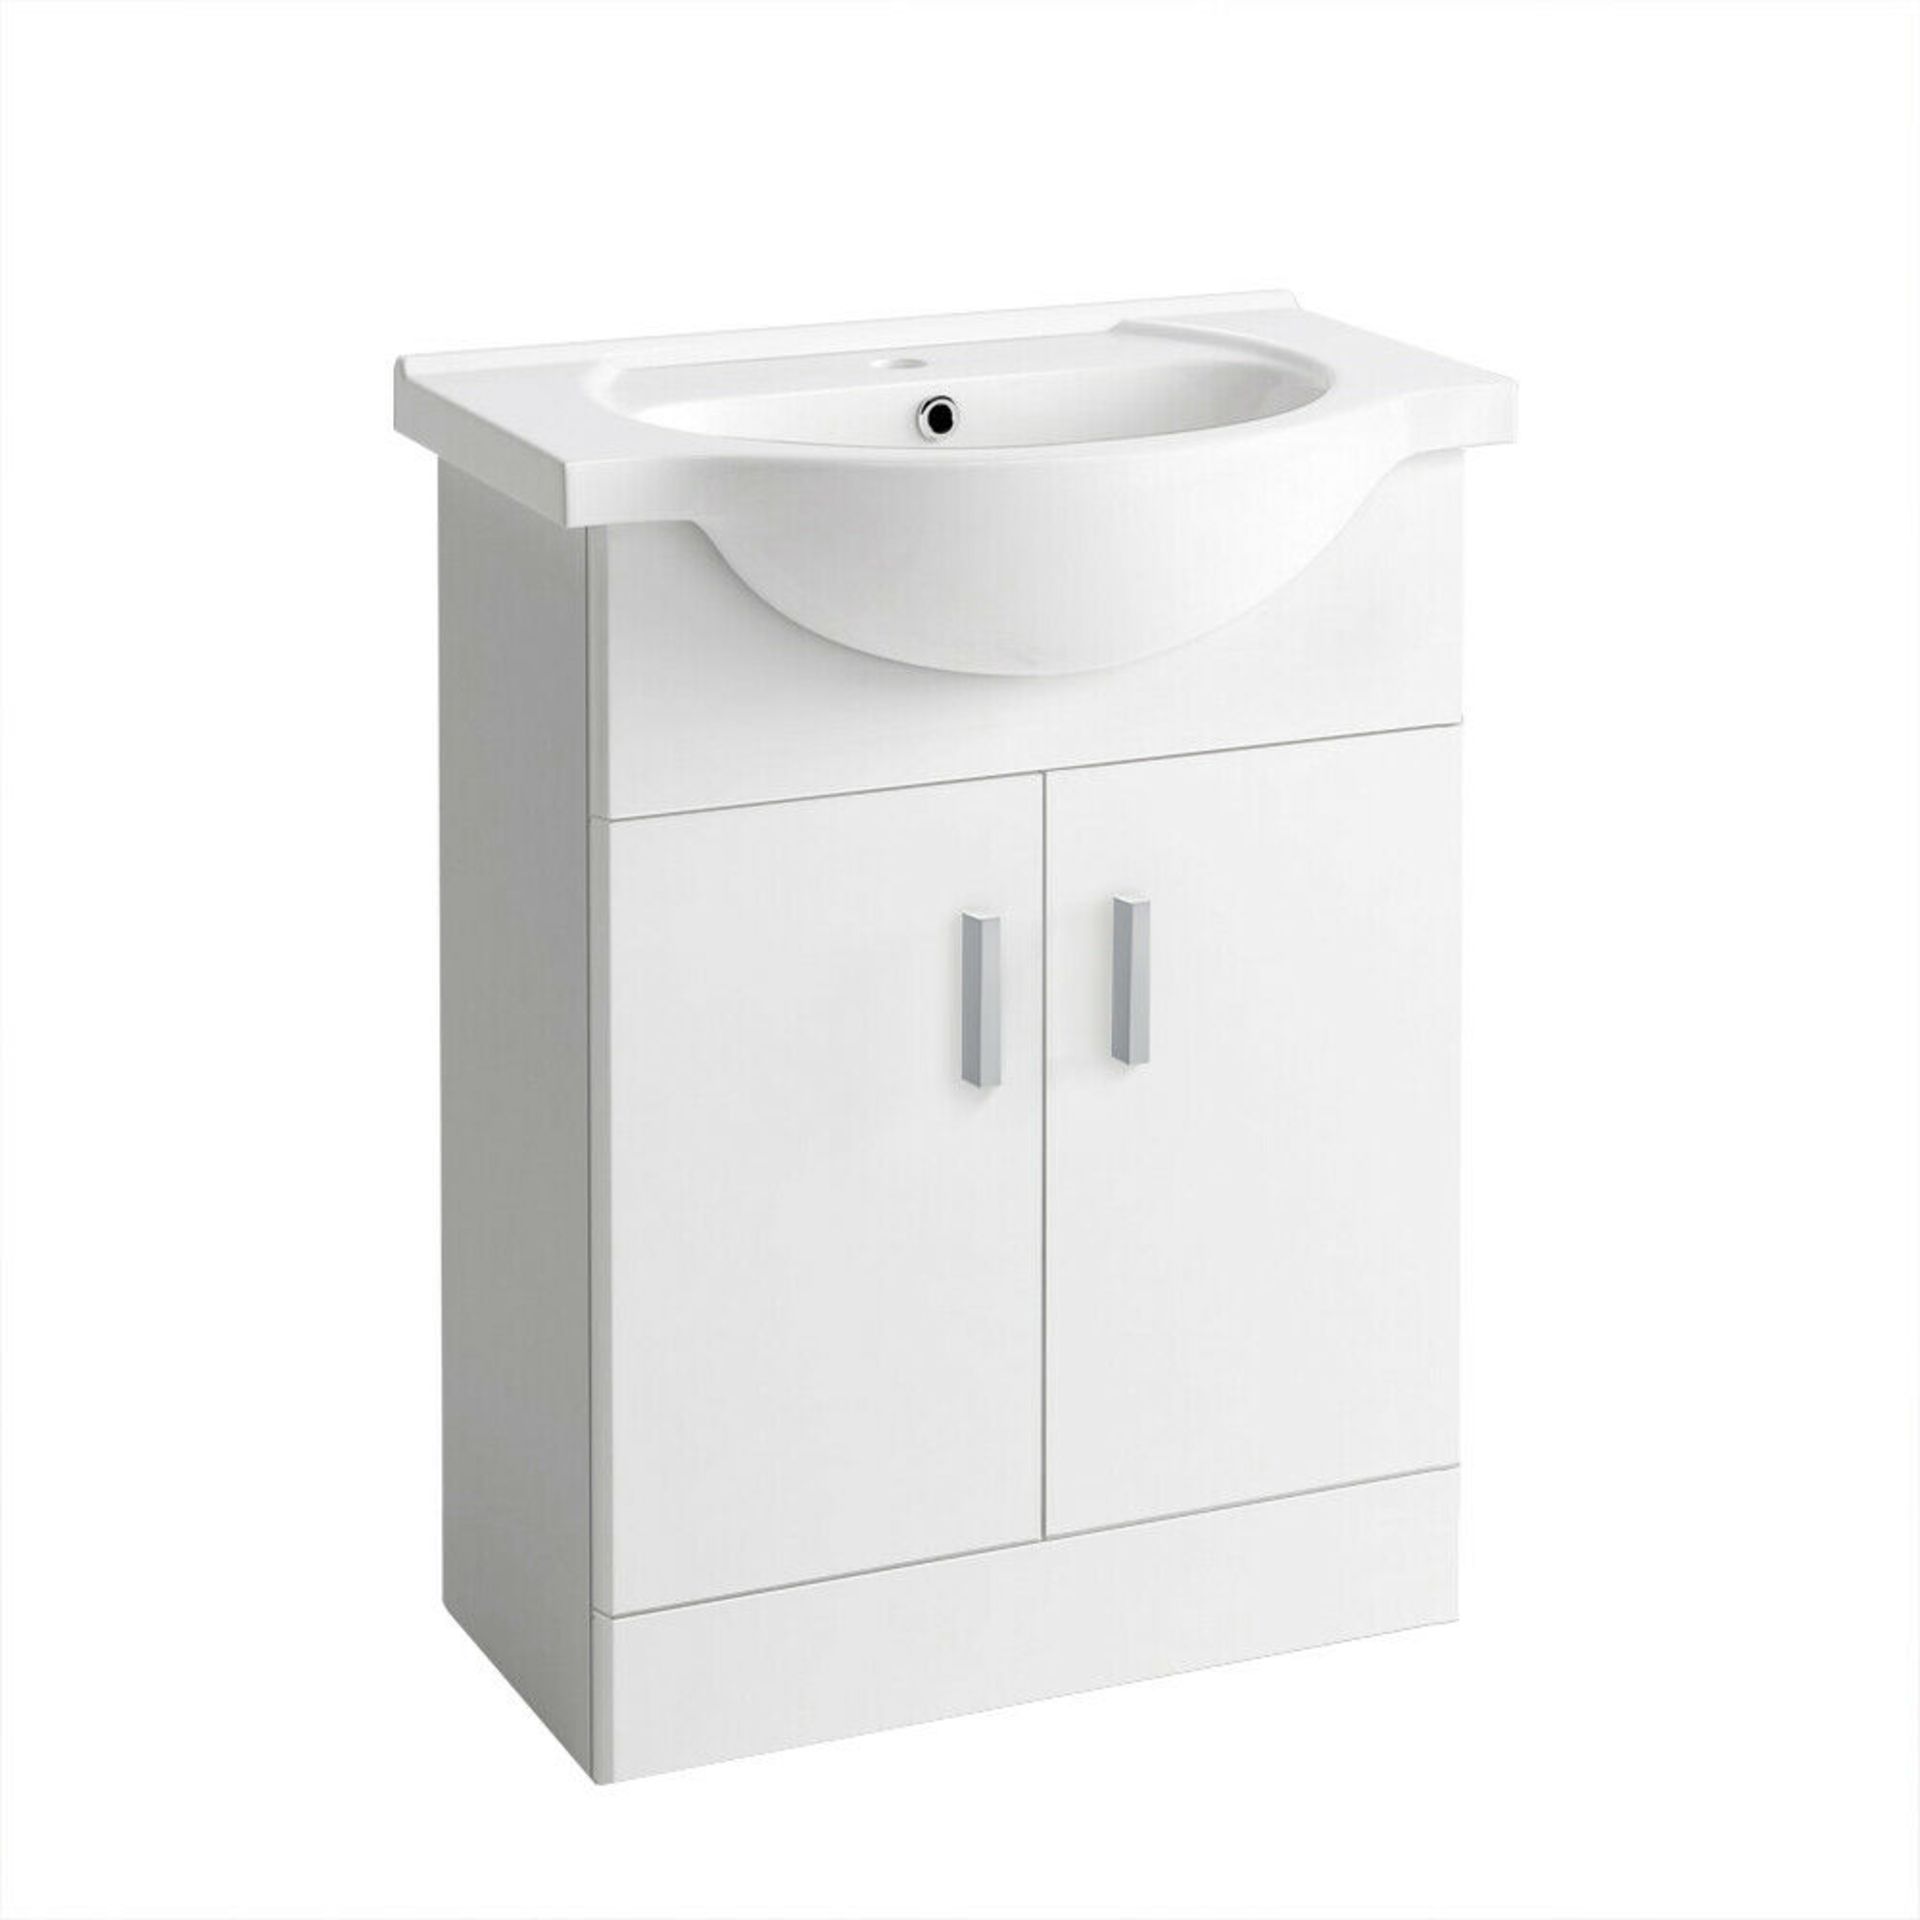 (AX20) New 550mm Bathroom Vanity Unit Basin 2 Doors Storage Cabinet Furniture Gloss White.